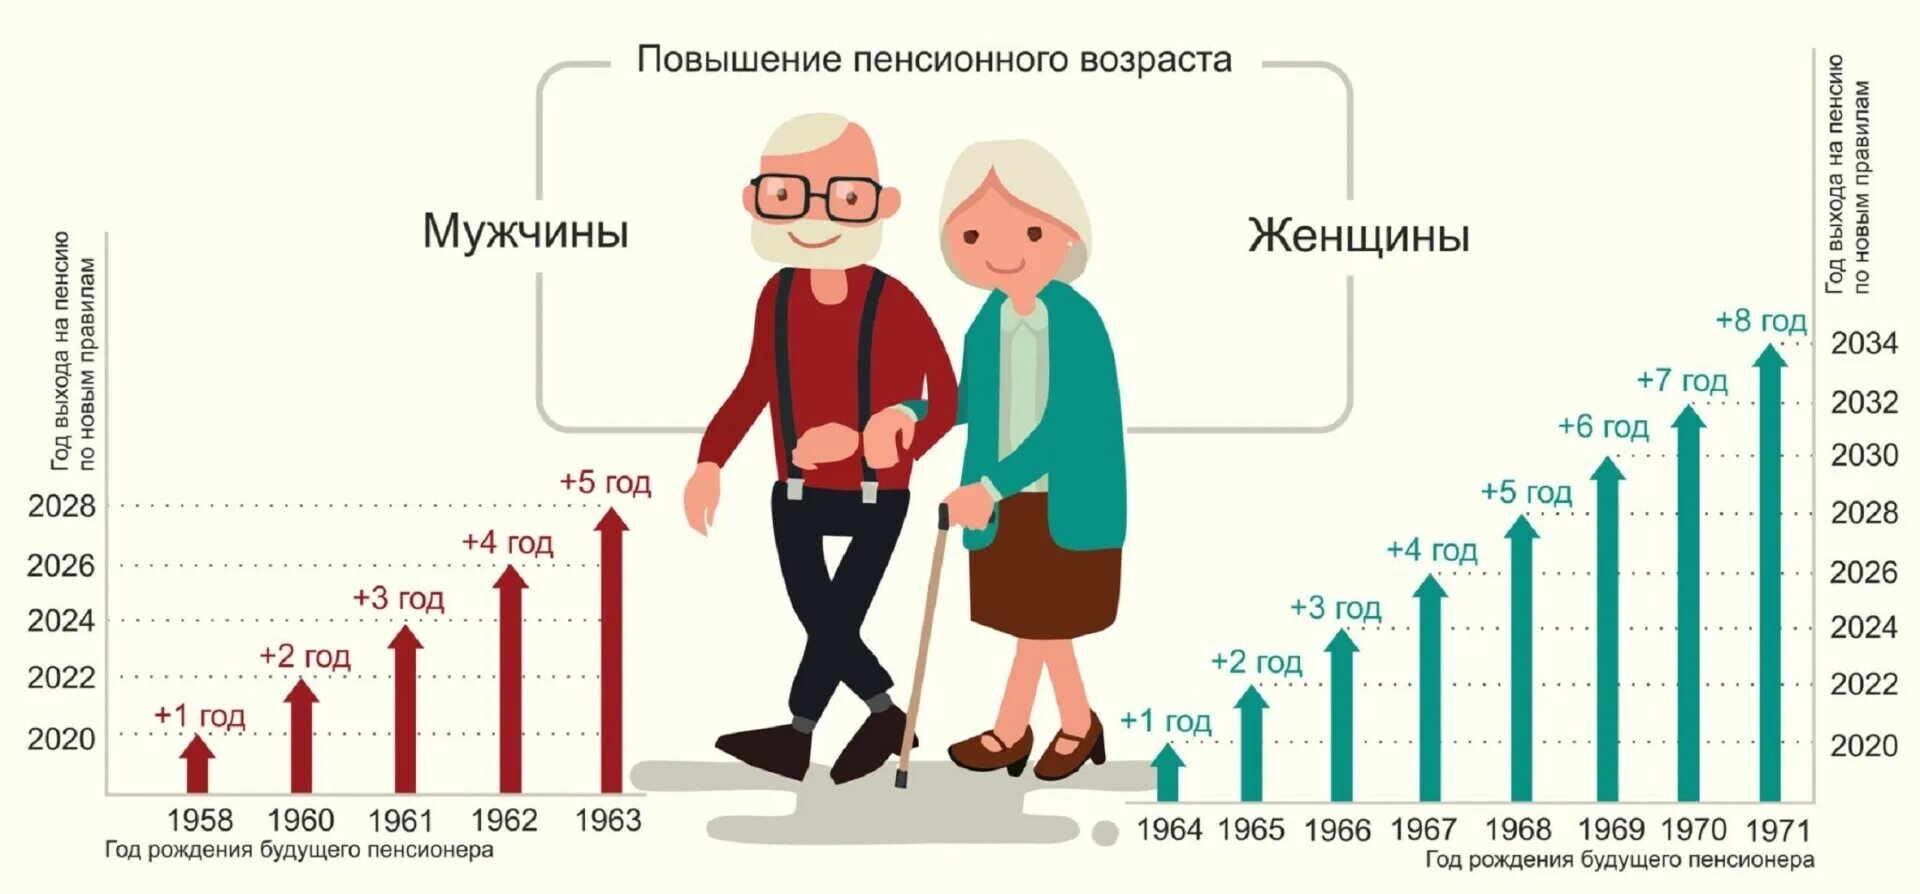 ПЕНСИЯПО старлсти возрост. Пенсия по старости Возраст. Пенсионеры по возрасту таблица. Пенсия в России.